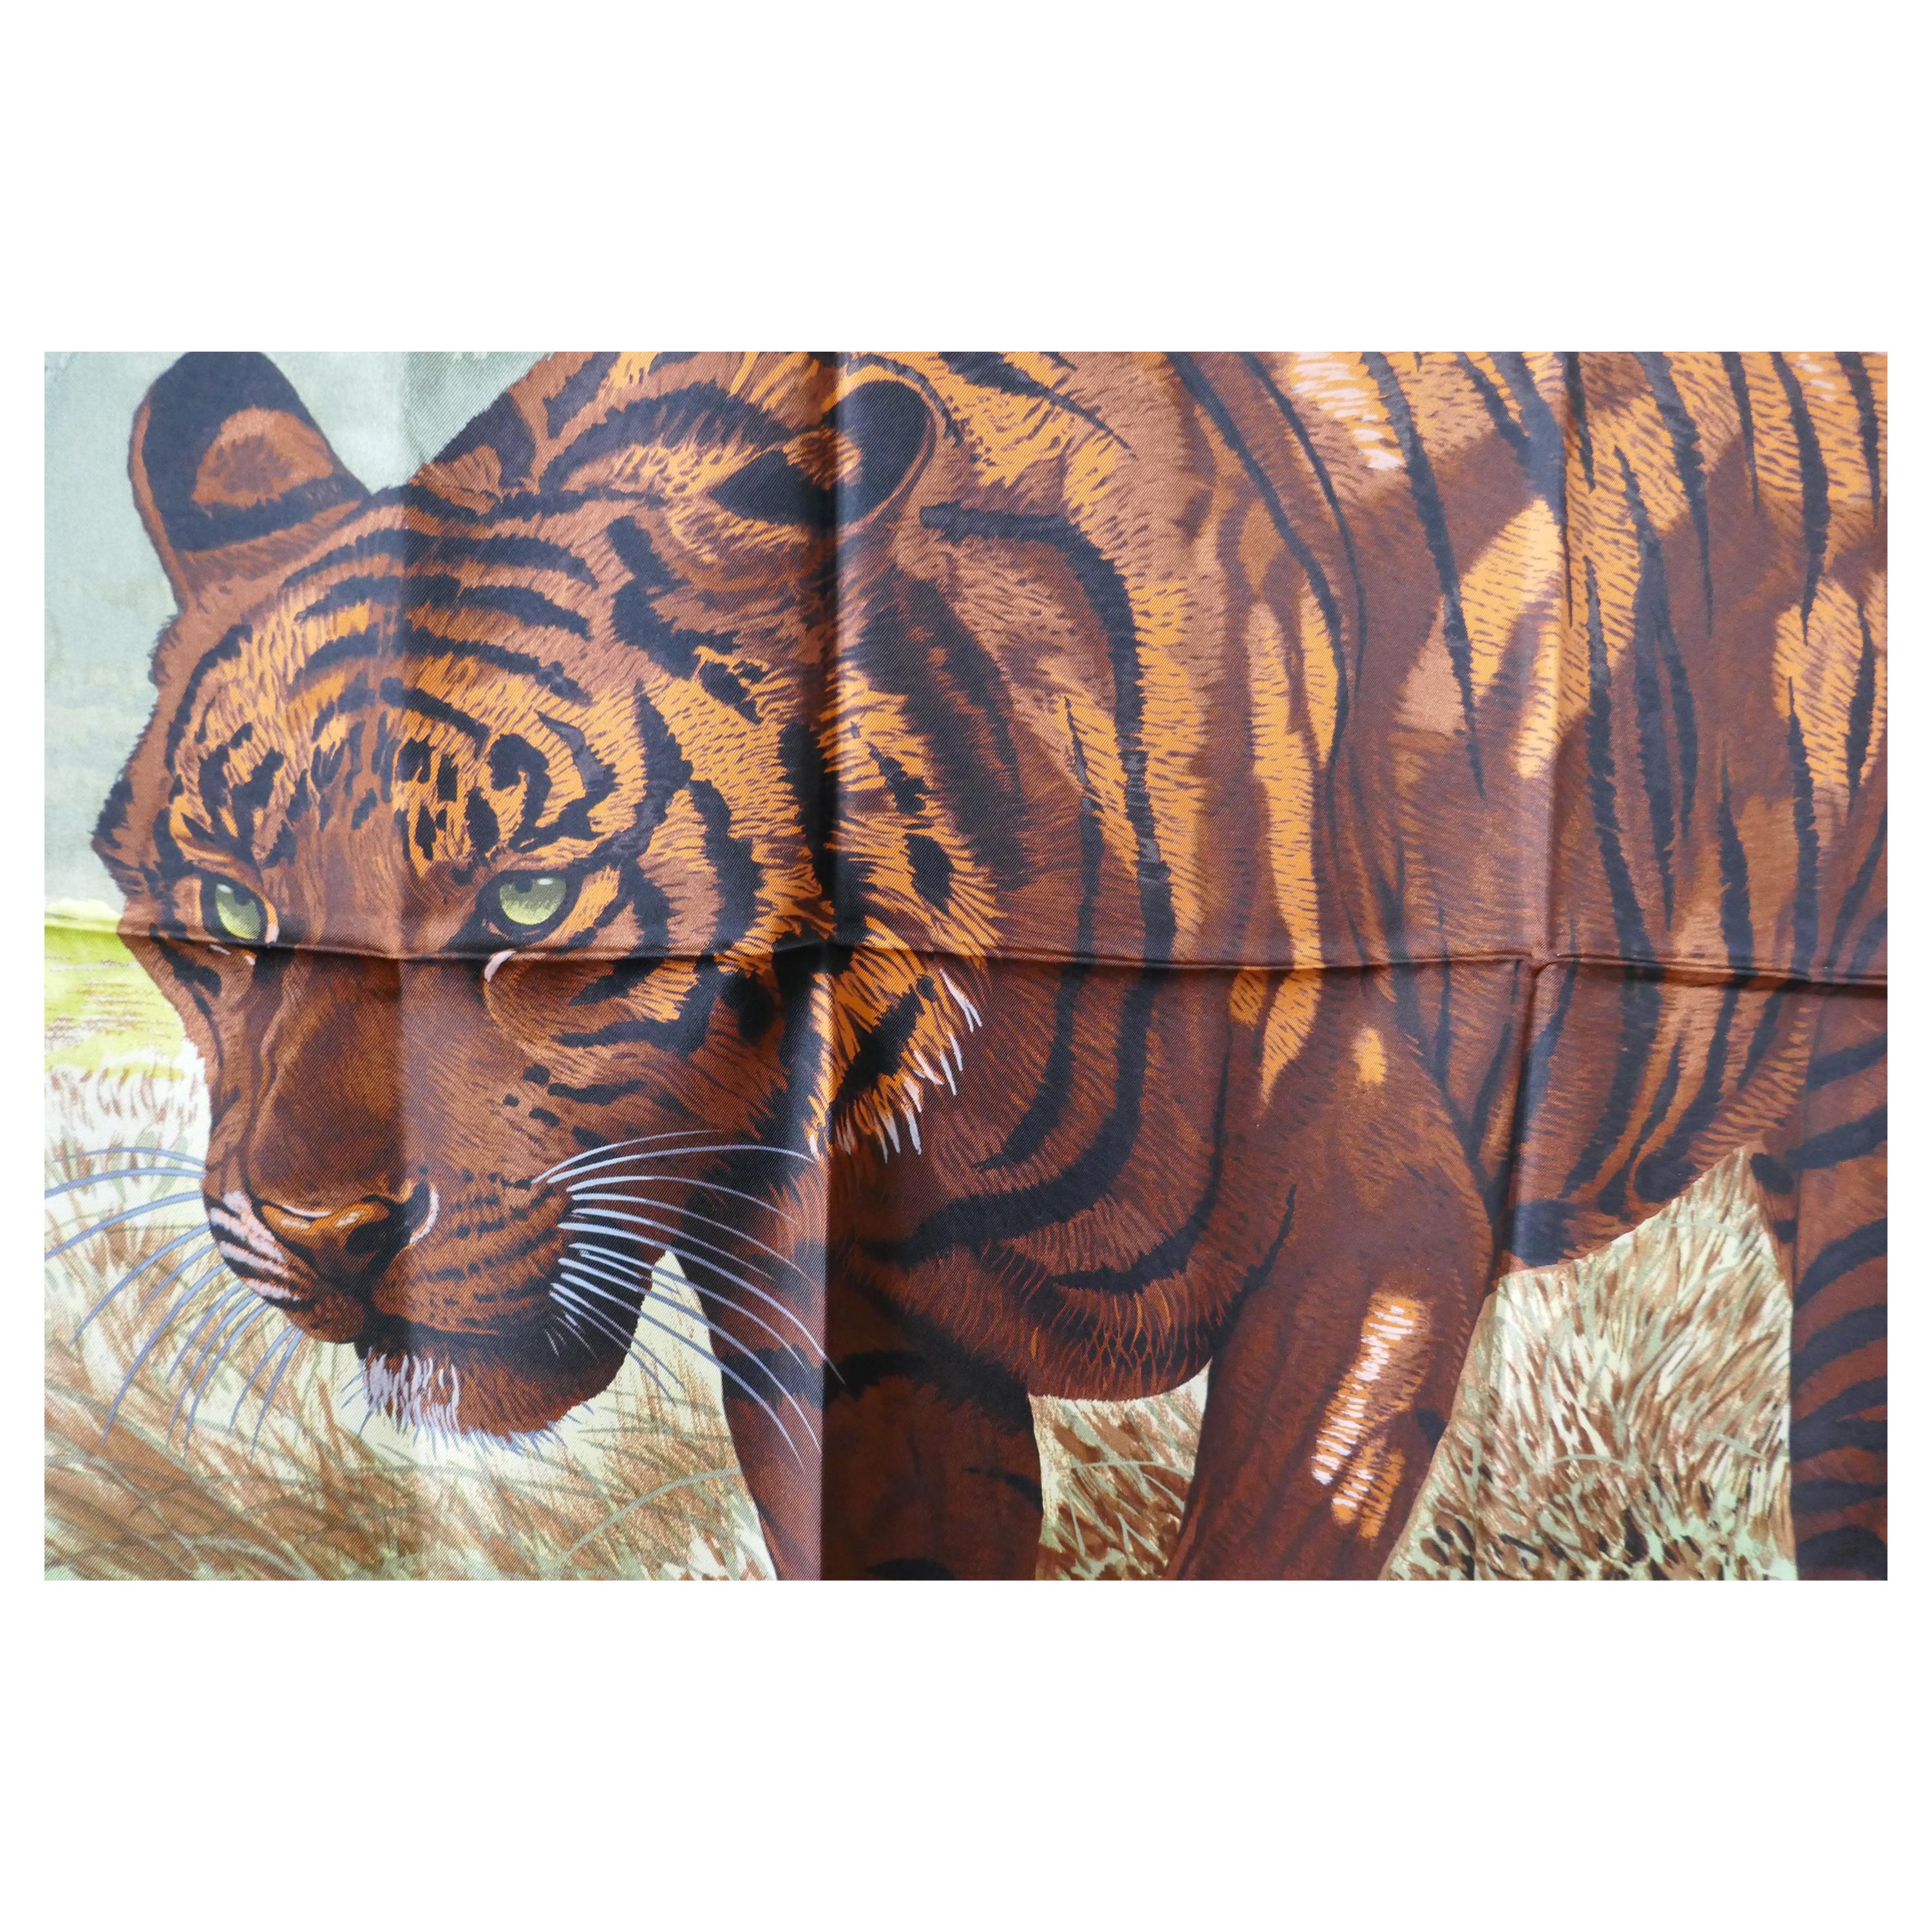 Very Rare Hermes Silk Scarf “Le Tigre du Benagale” by Robert Dallet